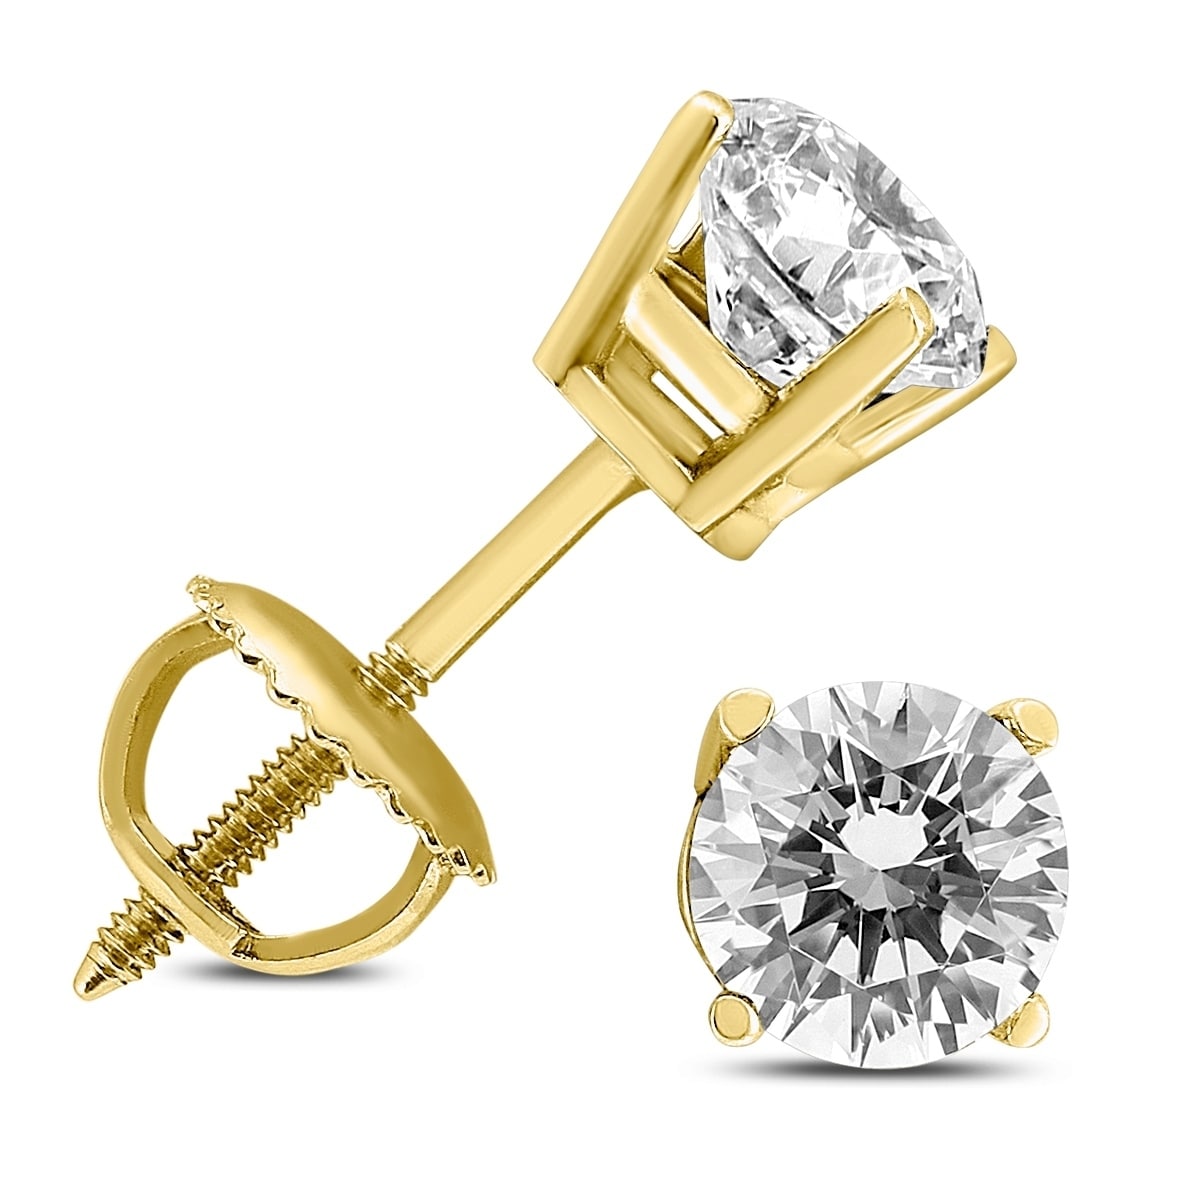 14k yellow gold basket created diamond round brilliant screw back stud earrings